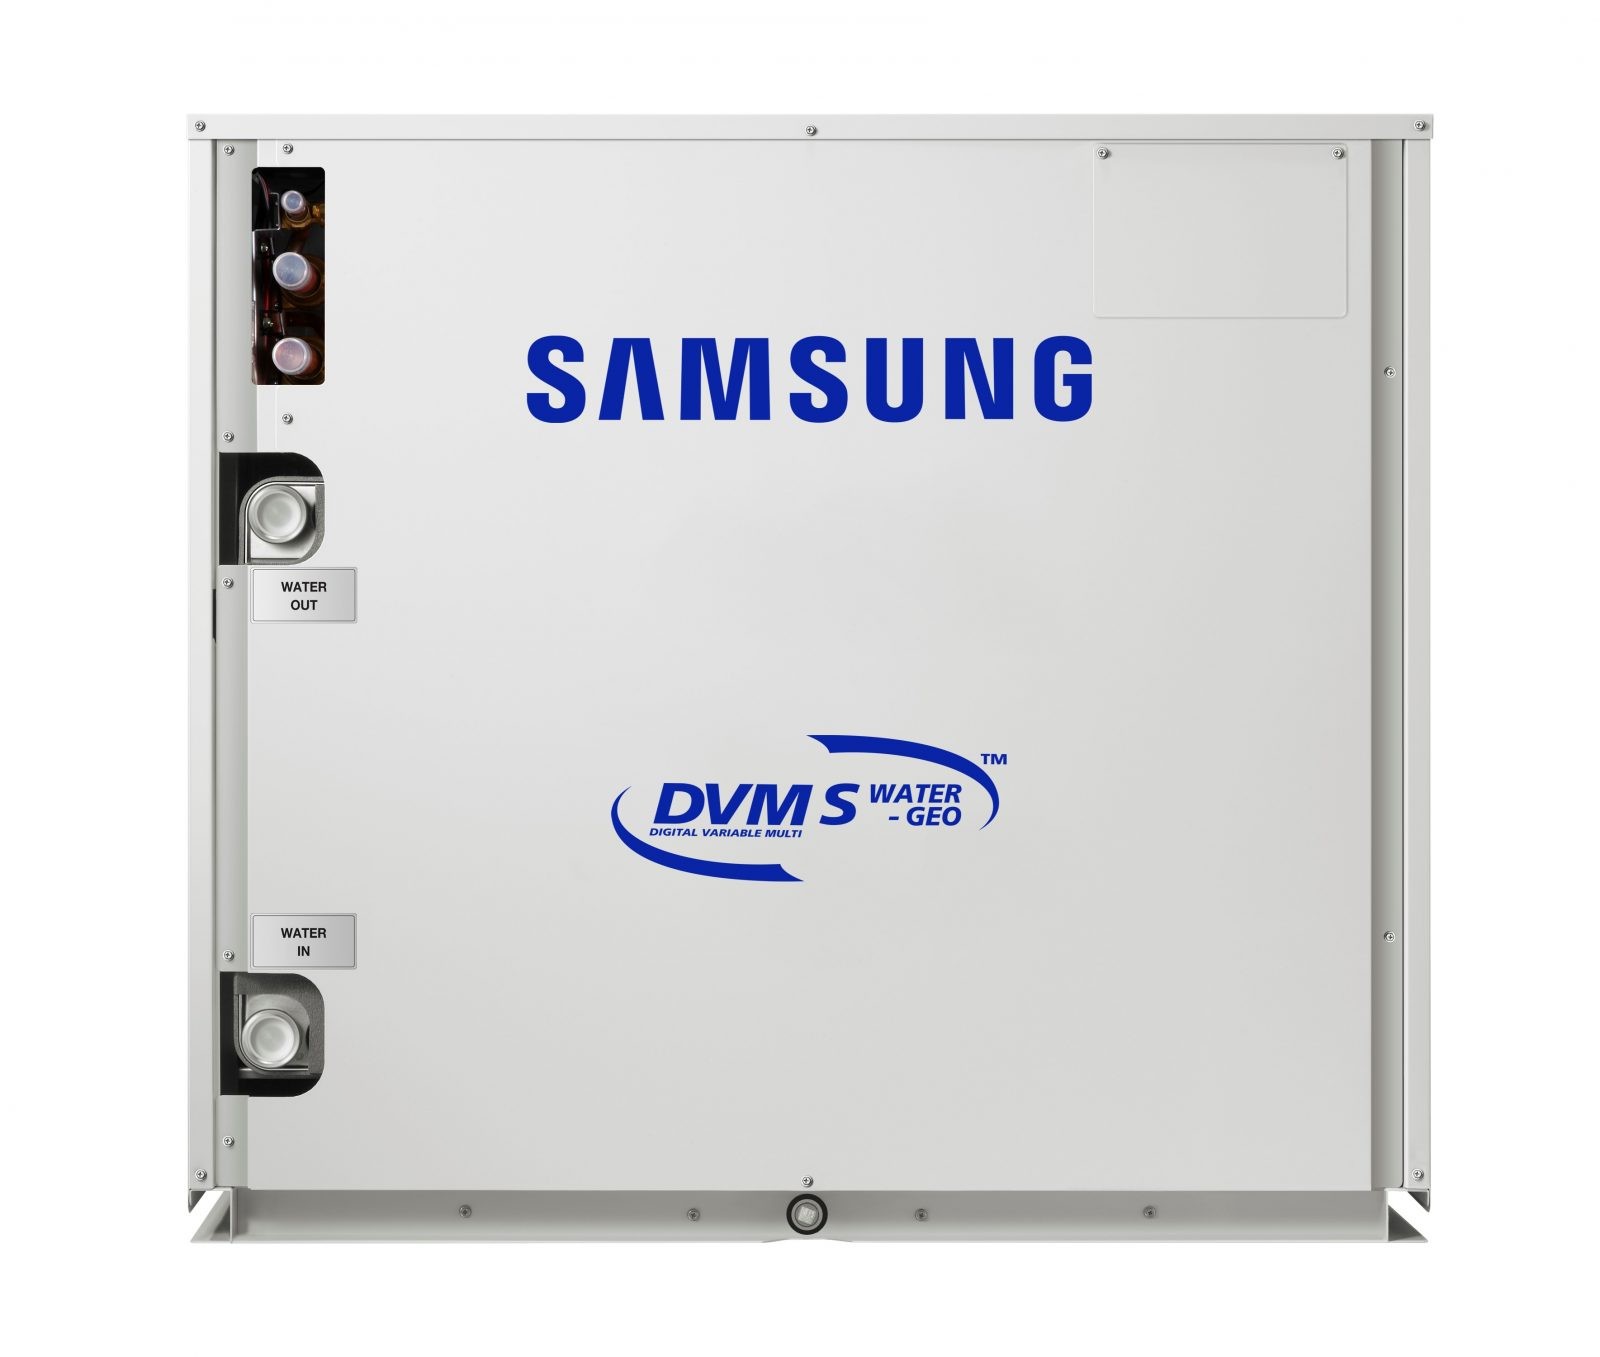 Външно тяло Samsung DVM S Water AM600MXWANR